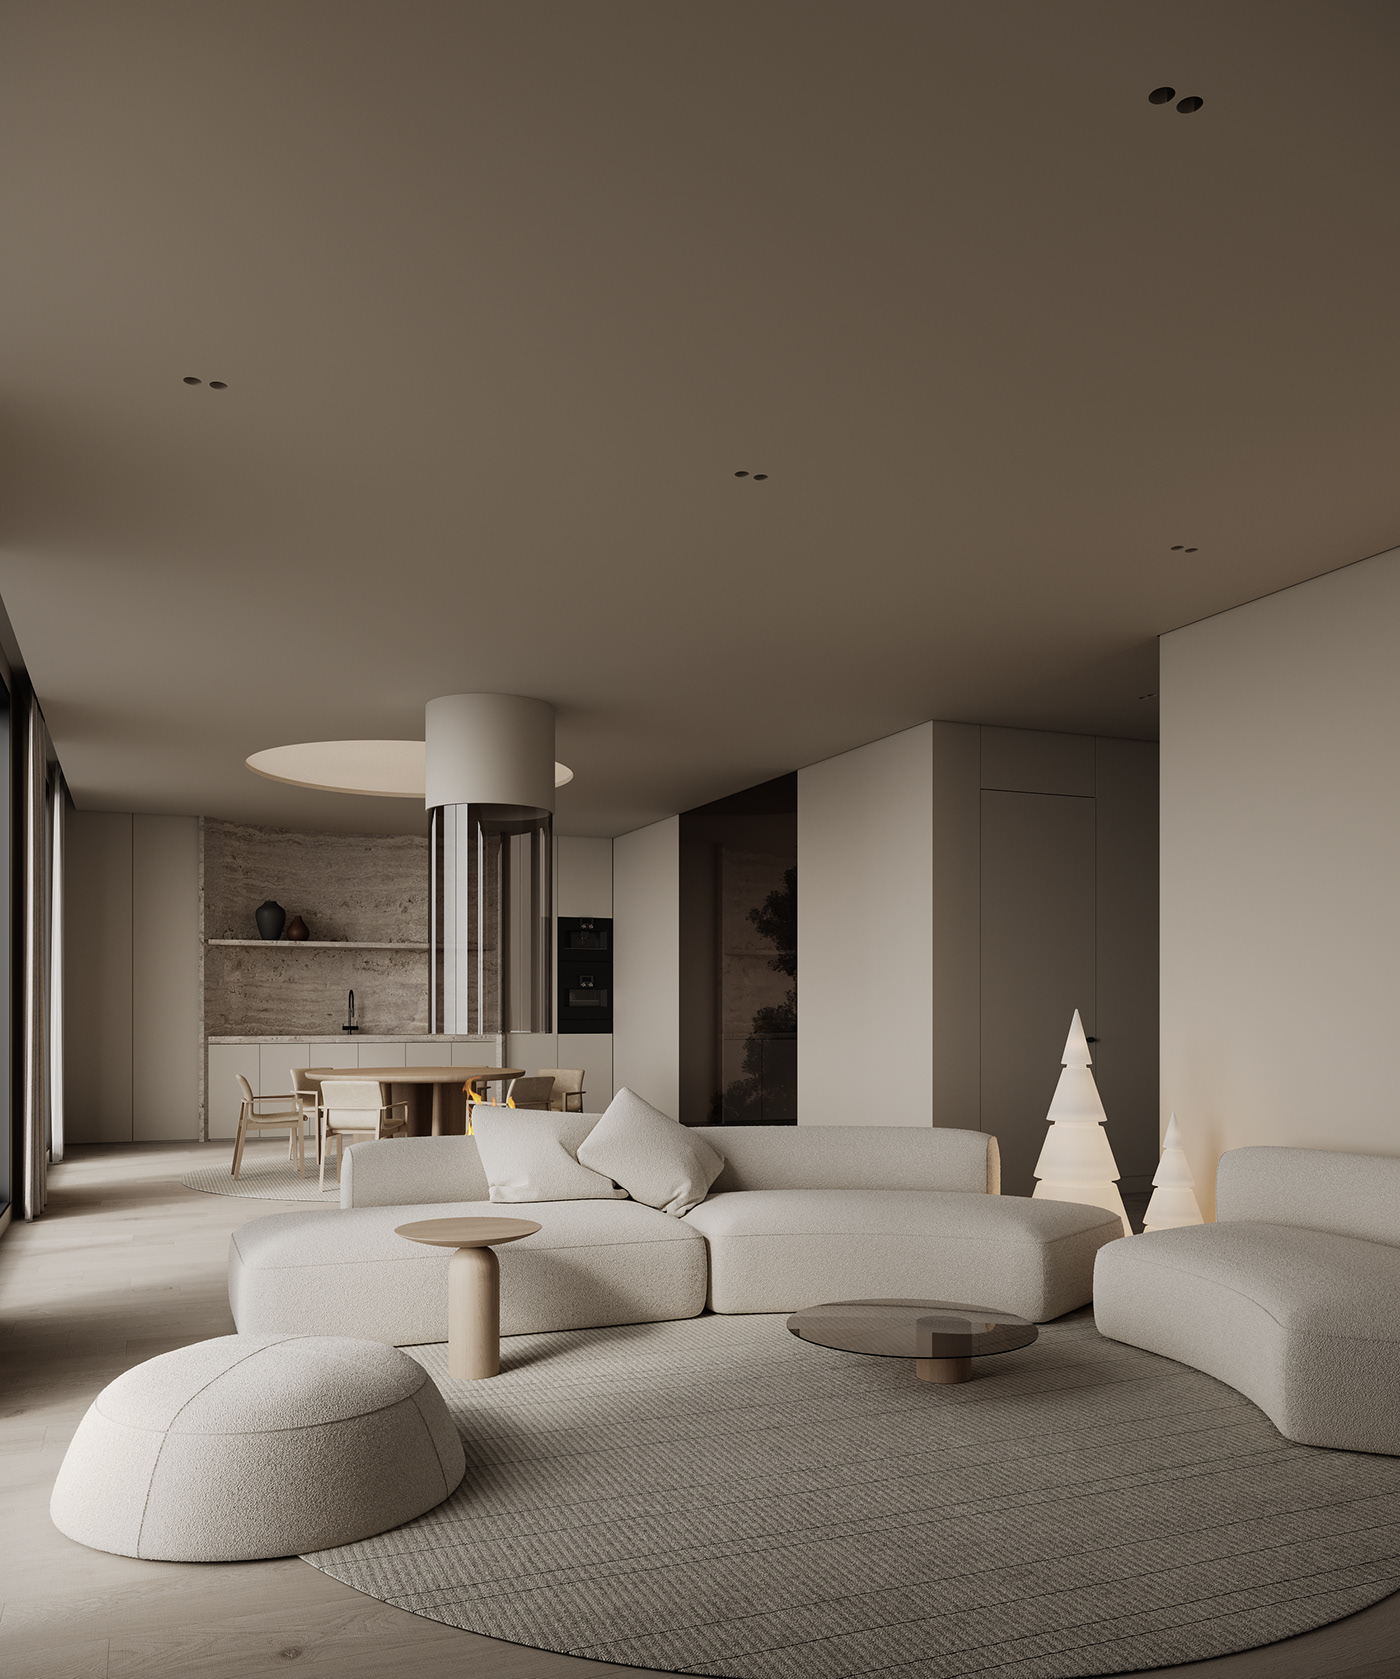 3ds max corona render  interior design  minimal Render design Villa interiors visualization